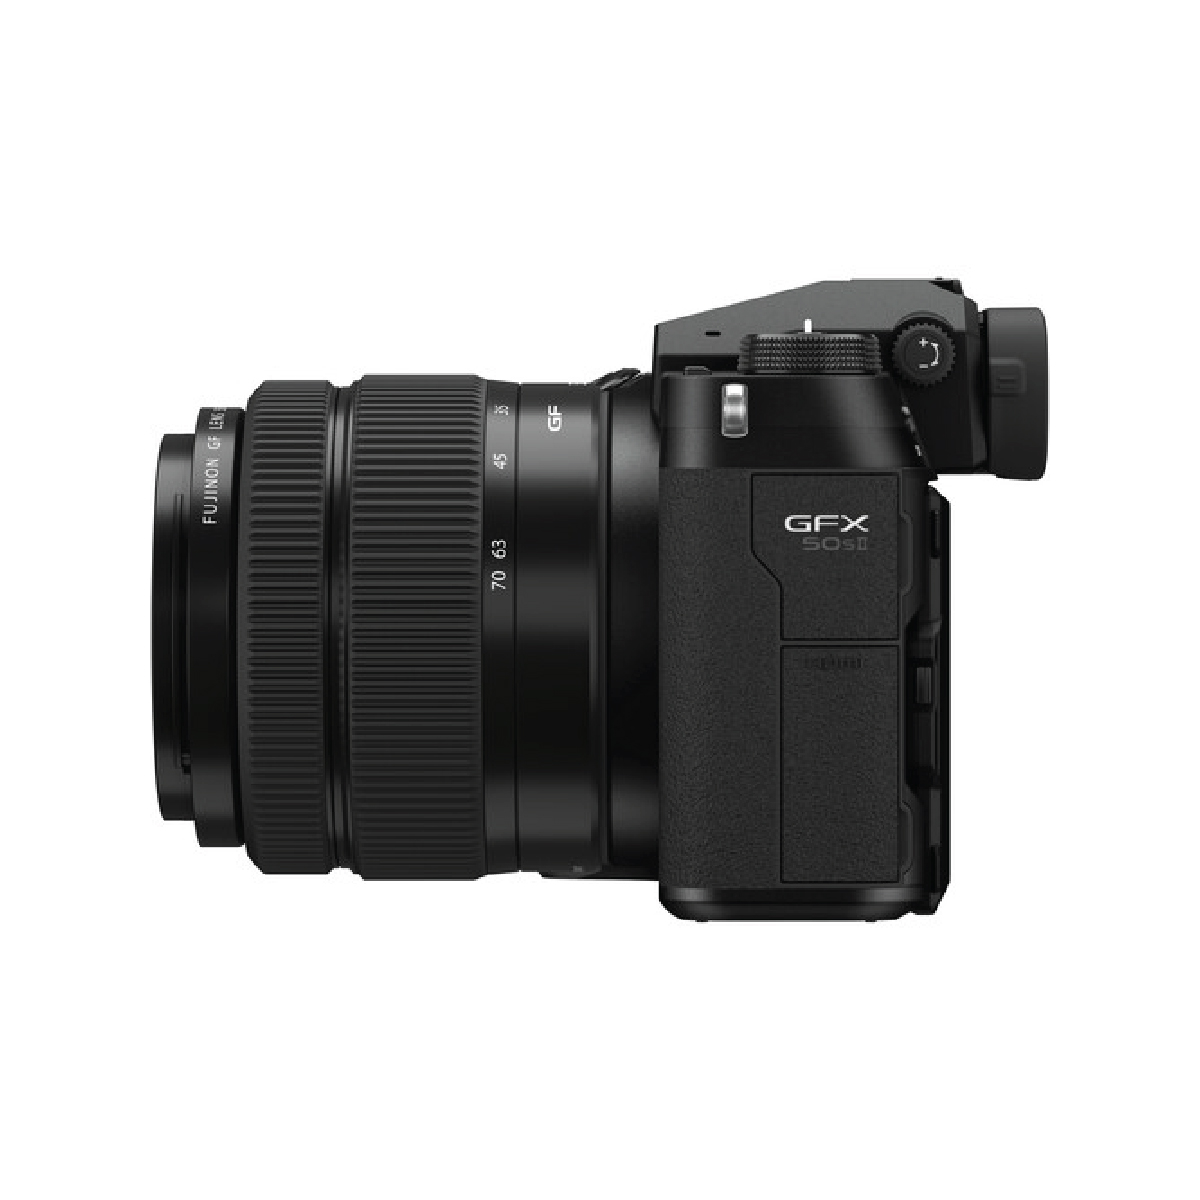 Fujifilm GFX 50S II Mirrorless Large Format Camera Body with GF35-70mmF4.5-5.6 WR Lens Kit – Black (2)